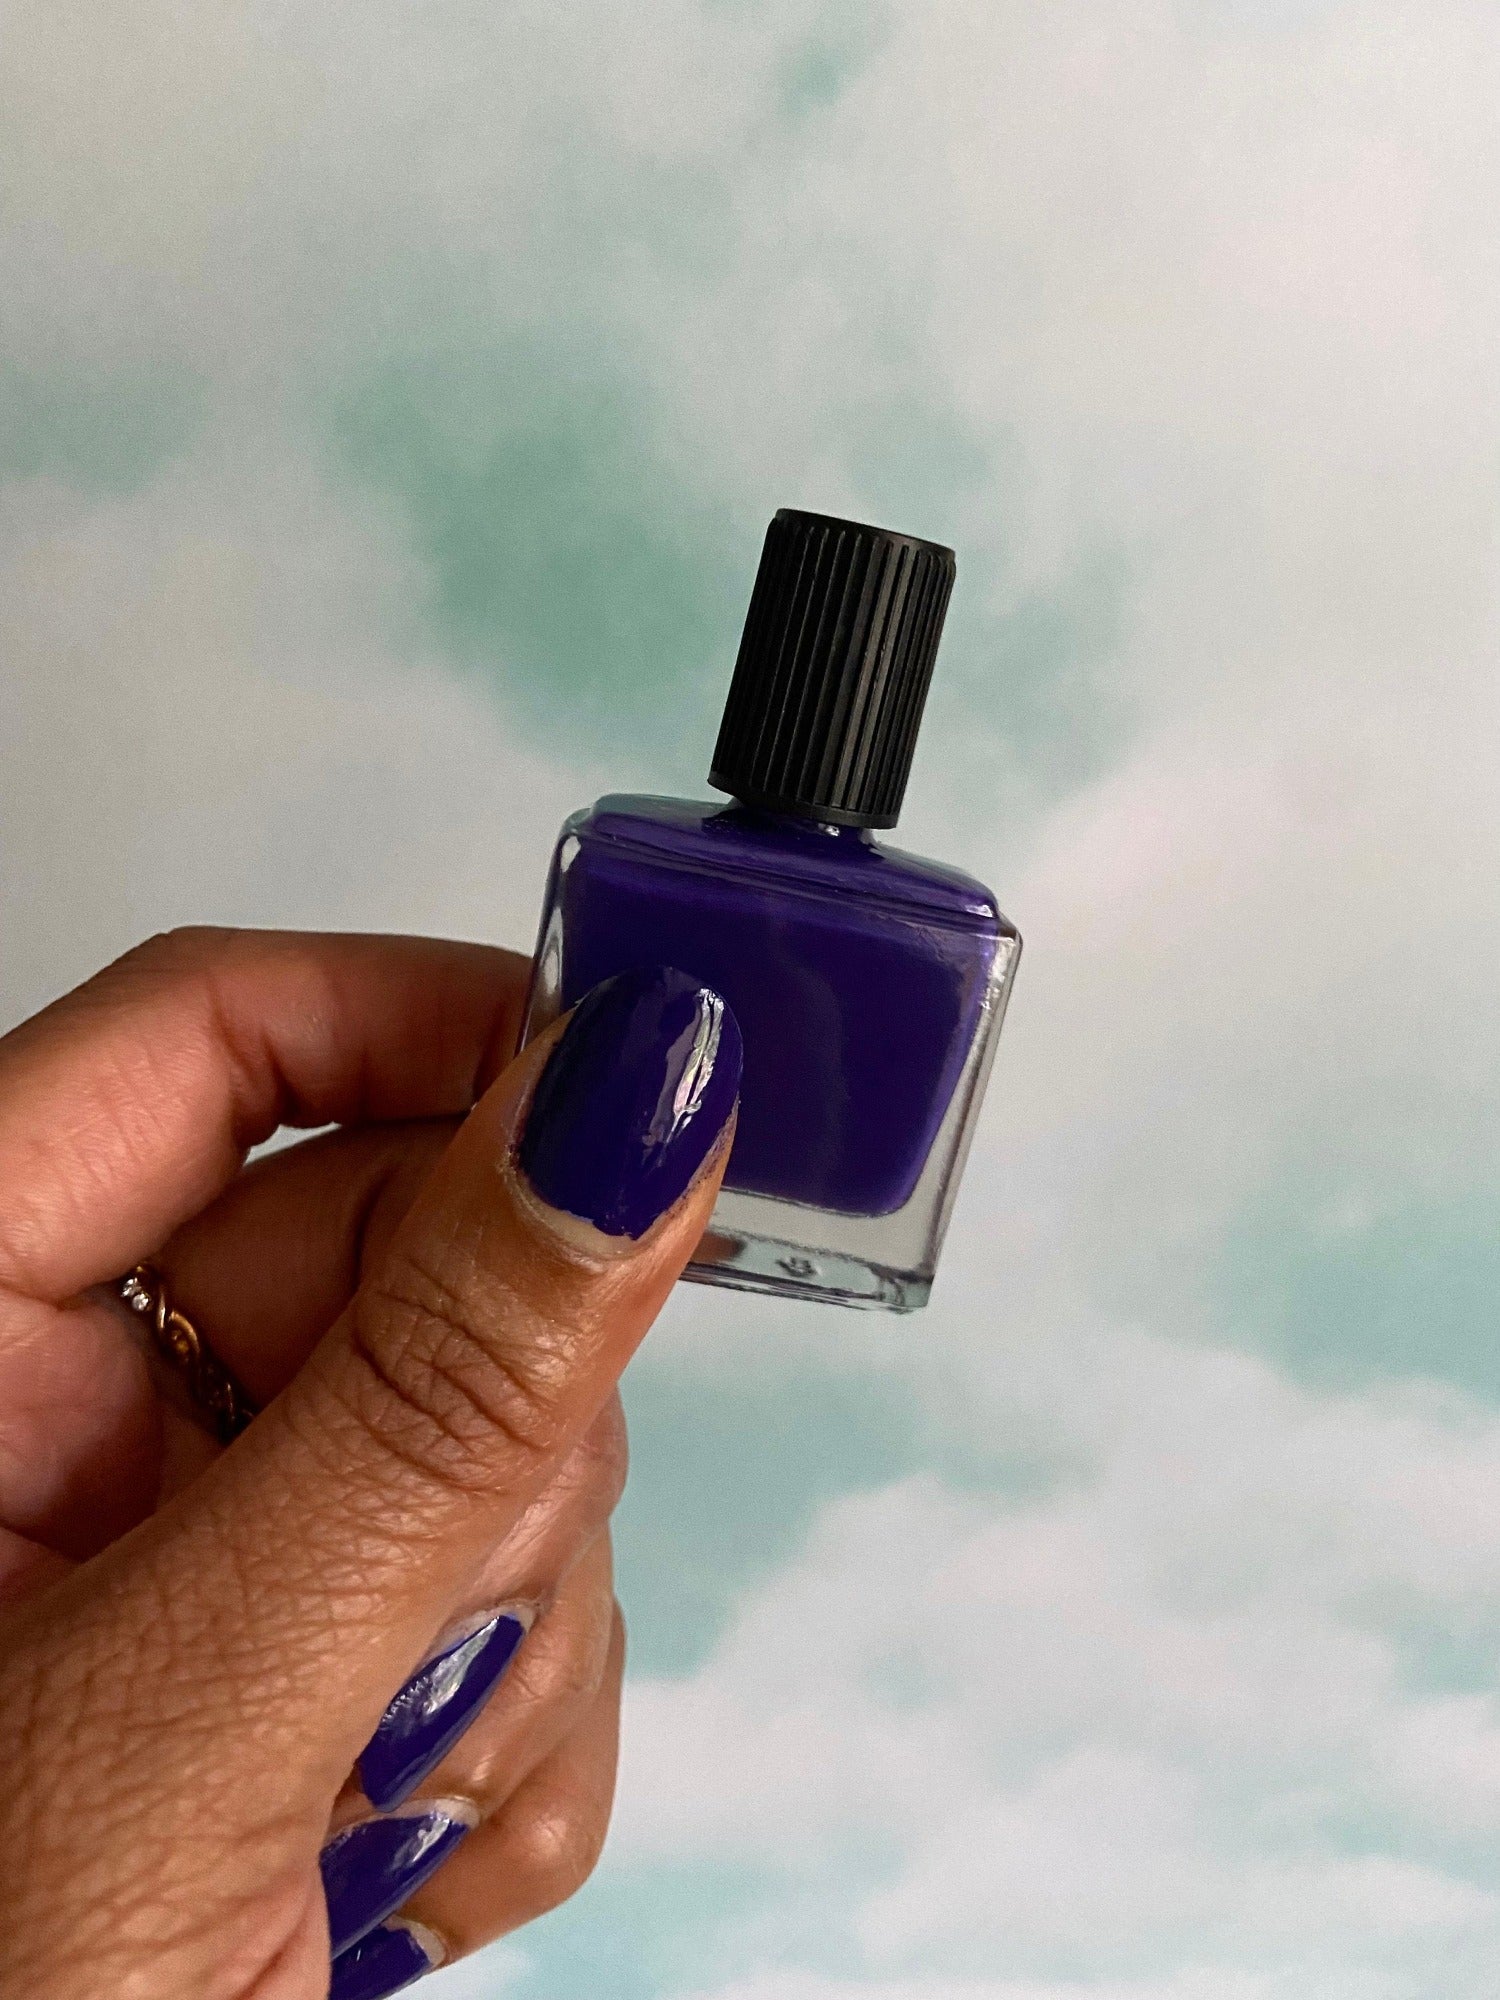 eggplant purple nail polish, vegan polish in purple